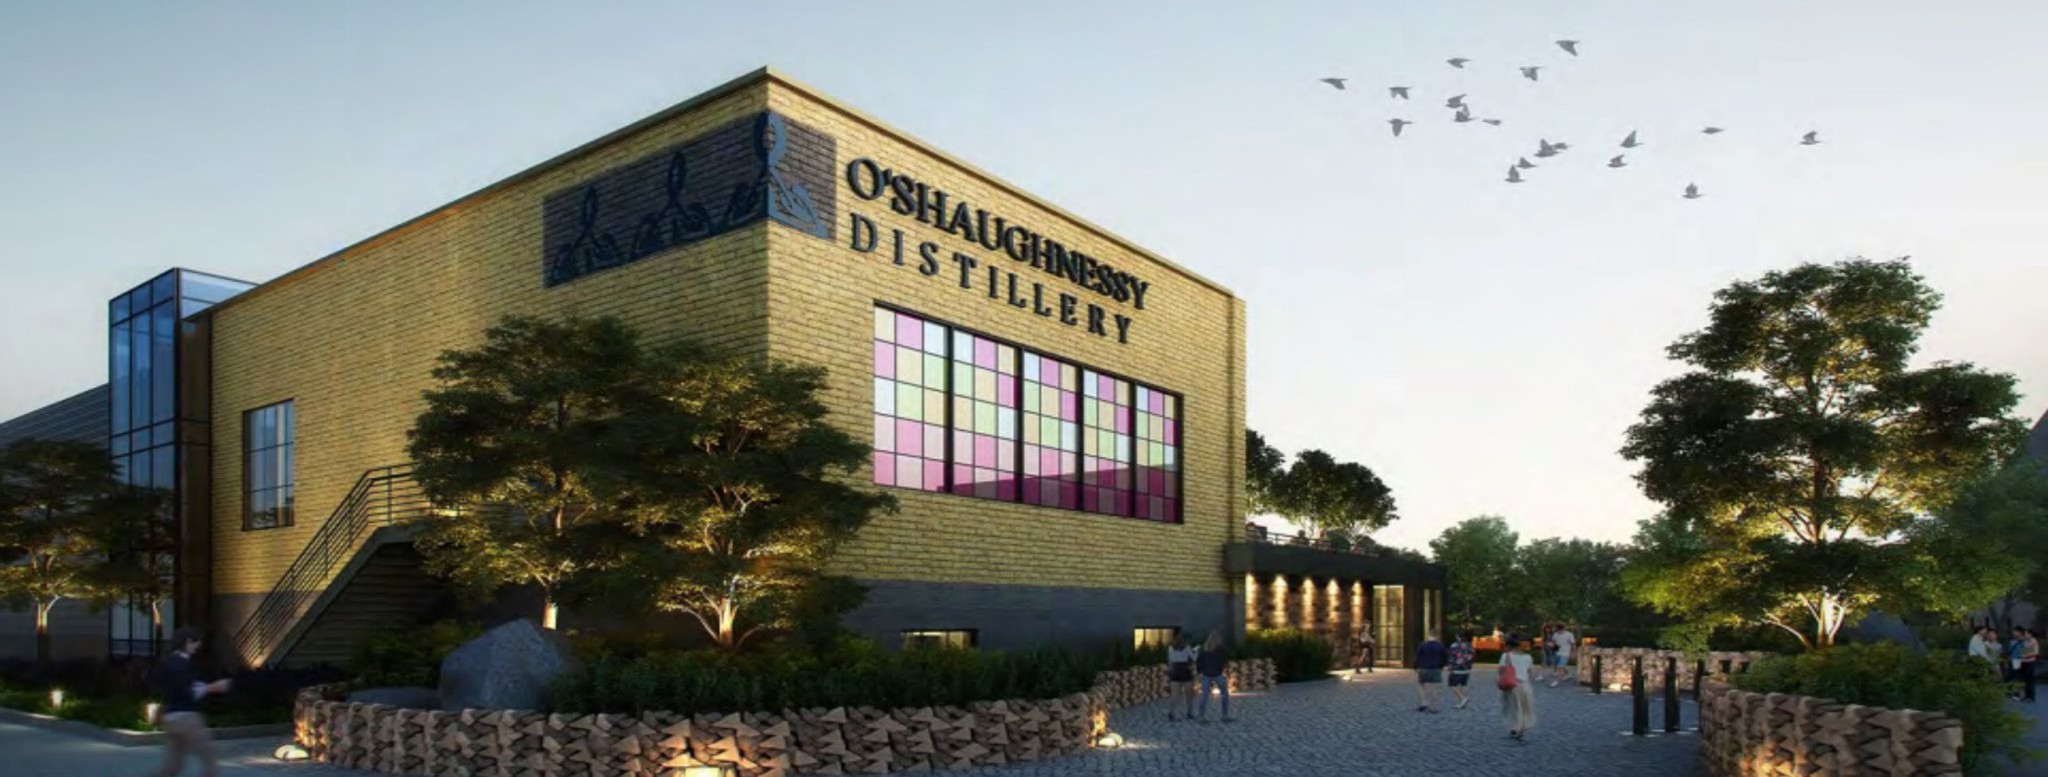 O’Shaughnessy Distilling in Minneapolis